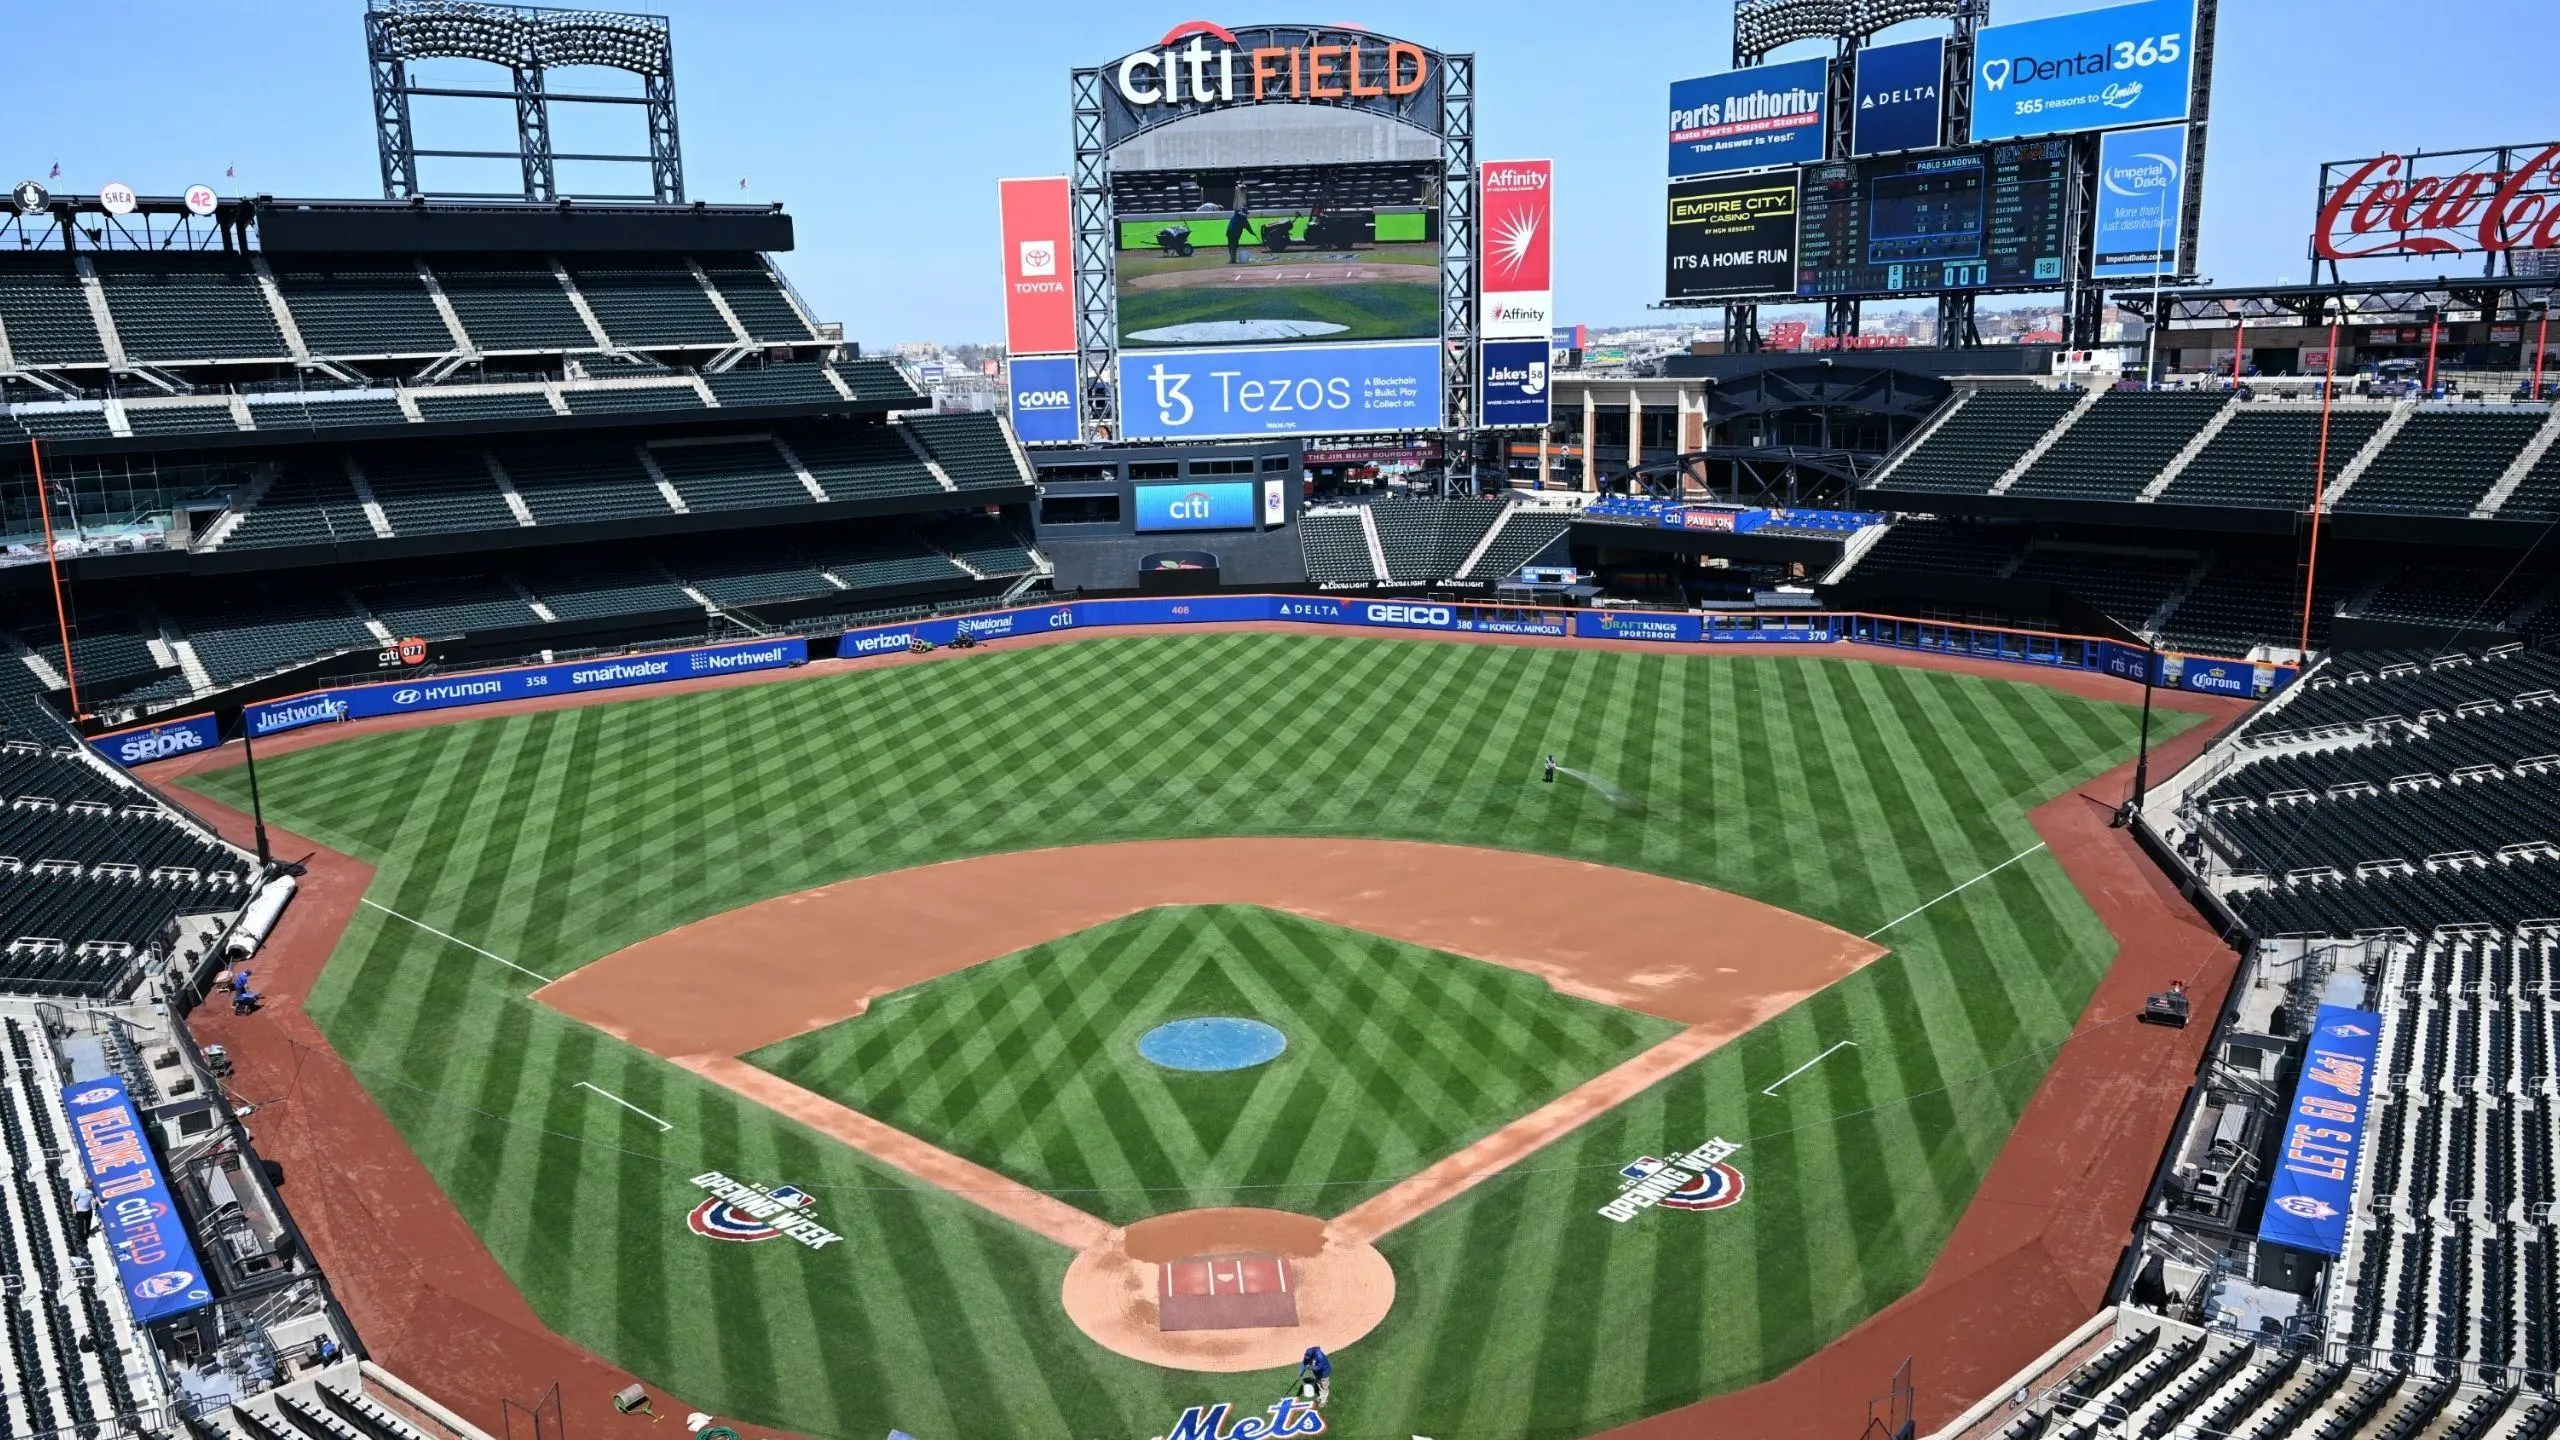 City Field - New York Mets